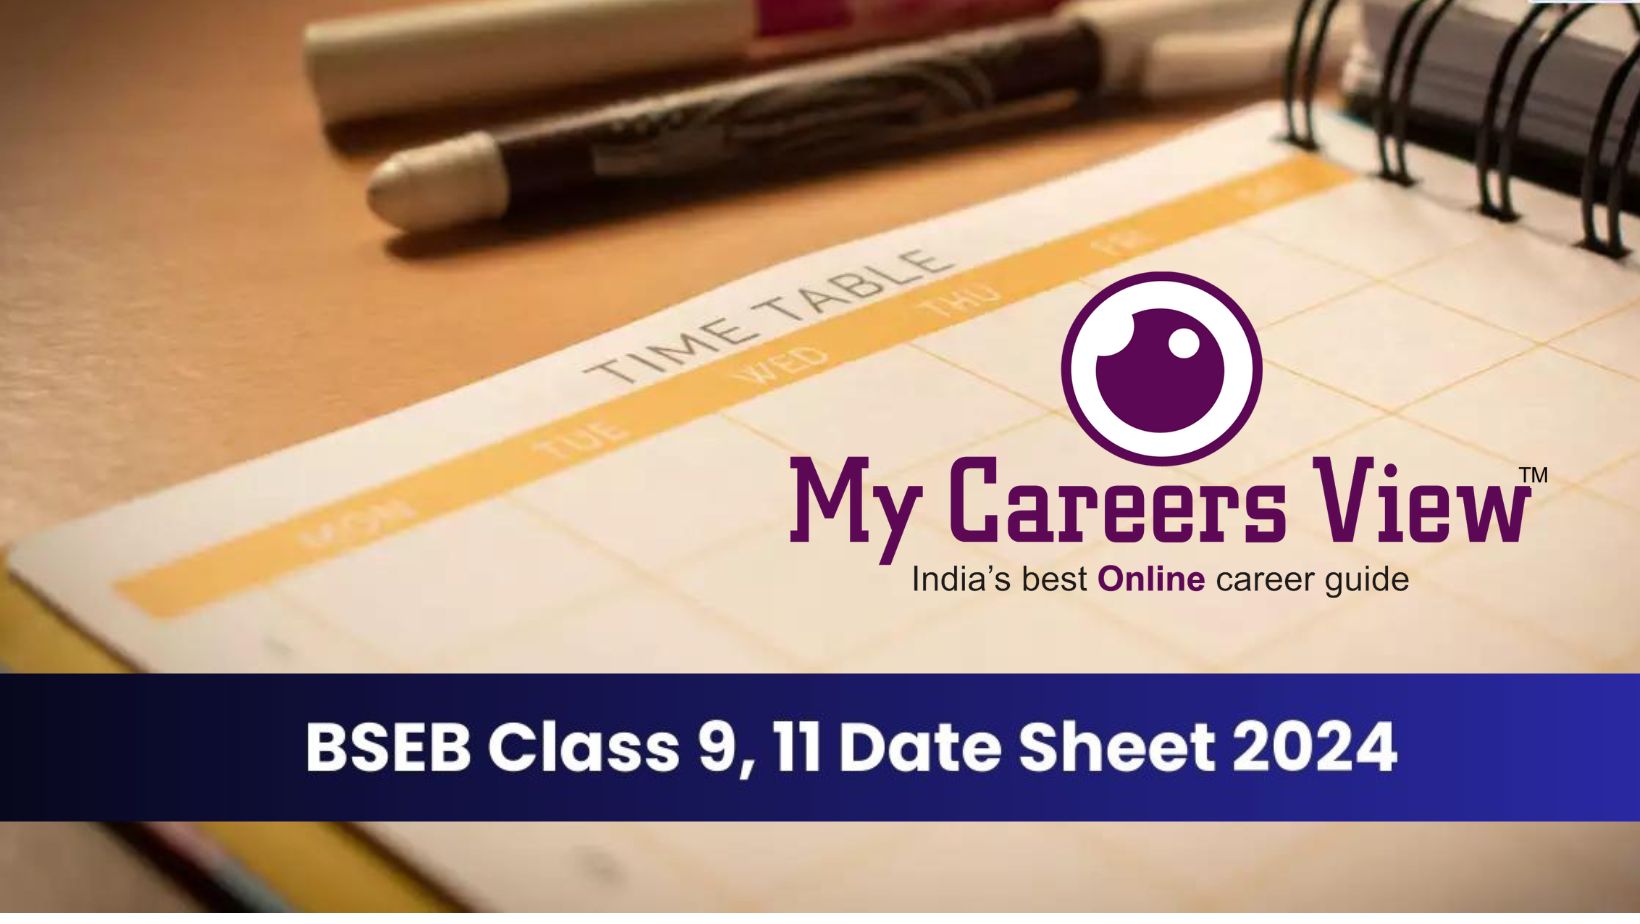 Bihar Board Class 9, 11 Date Sheet 2024 released at